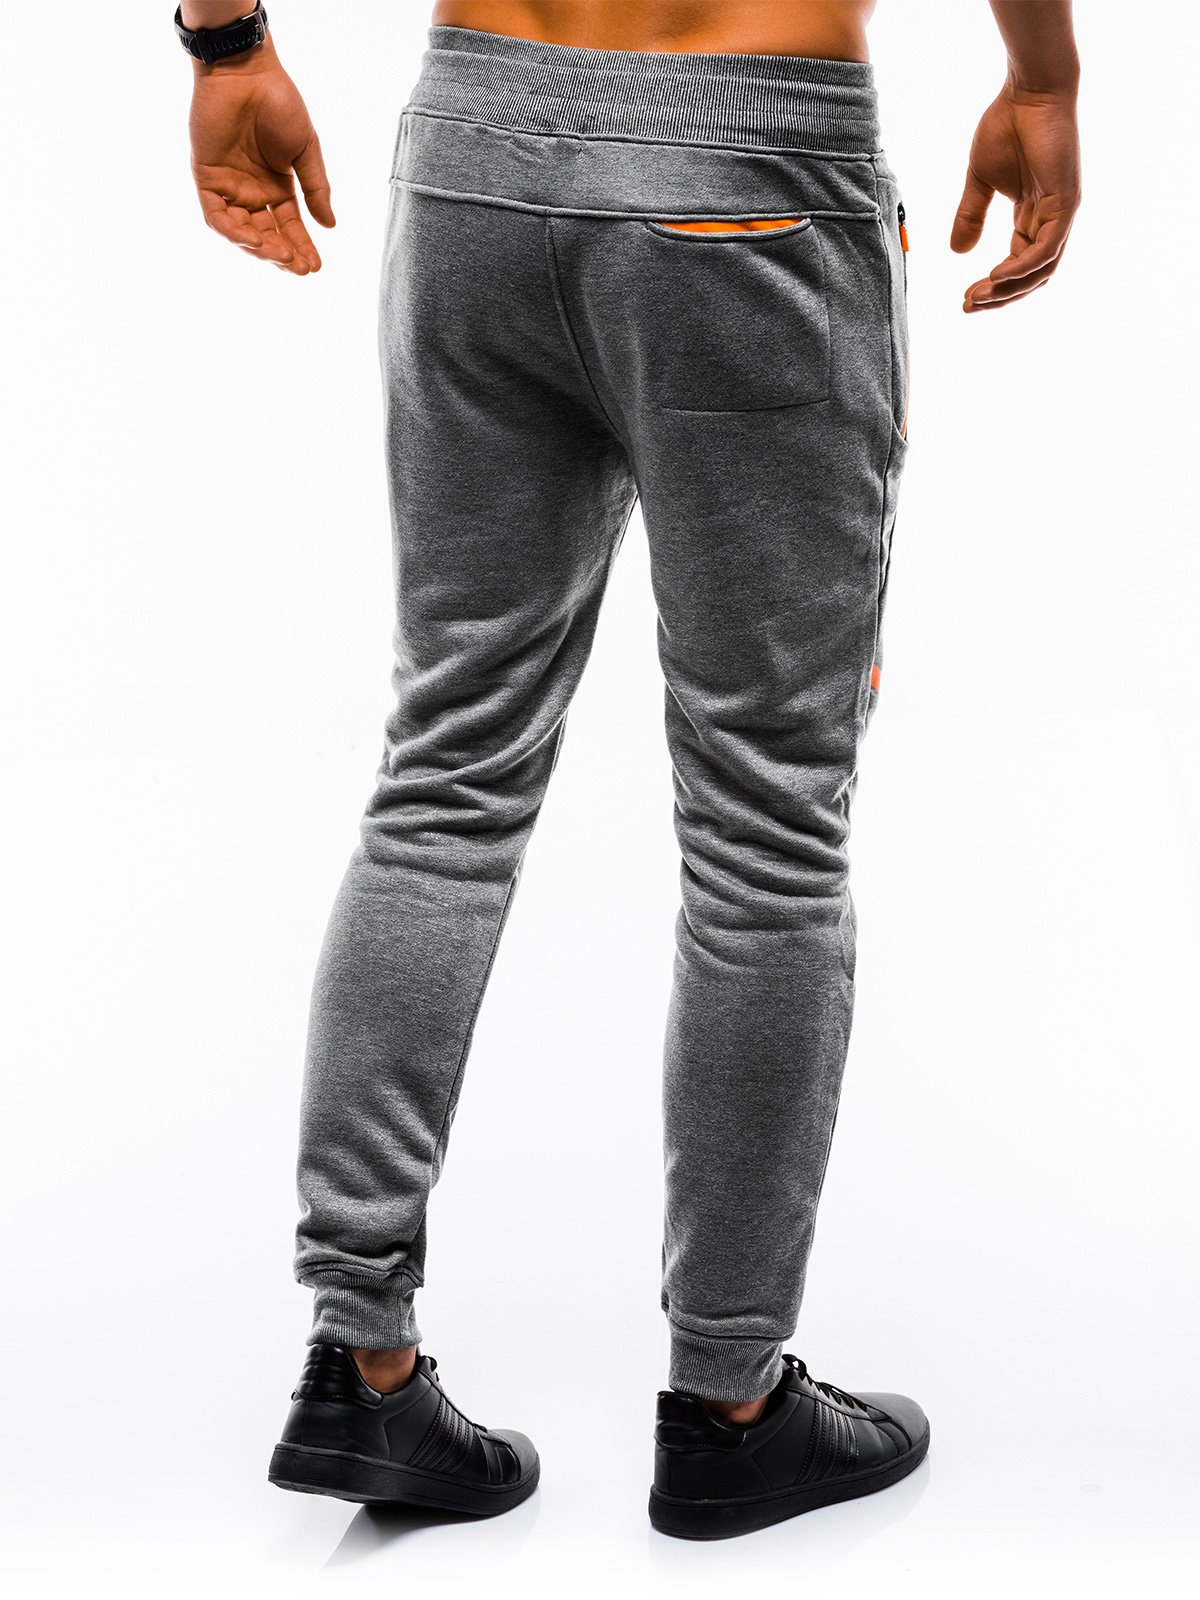 Men's sweatpants P742 - dark grey | MODONE wholesale - Clothing For Men